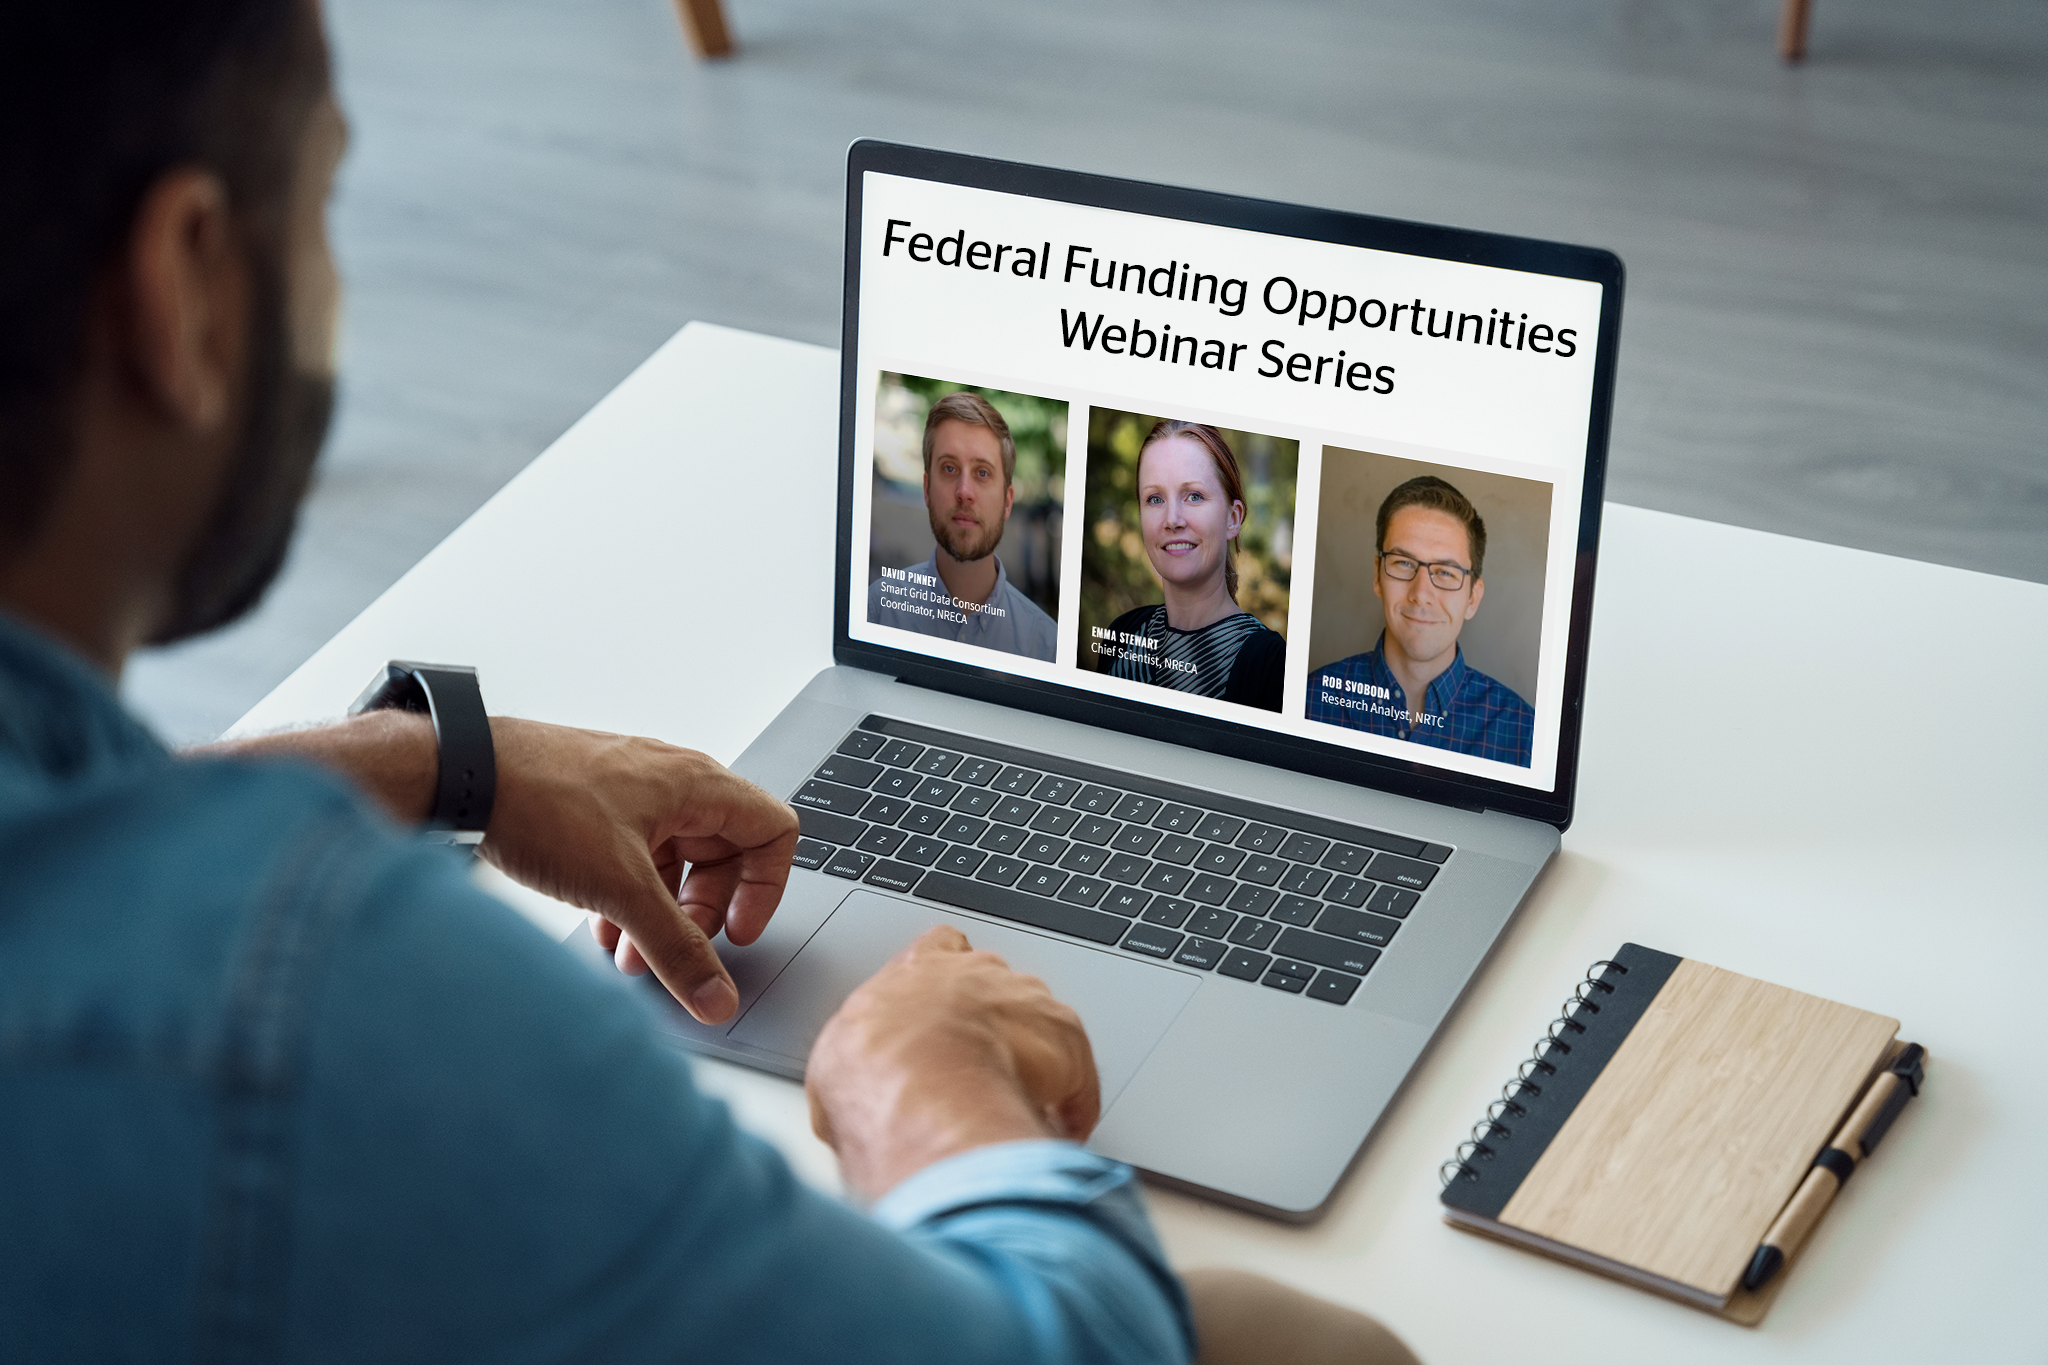 Federal Funding Opportunities Webinar Series